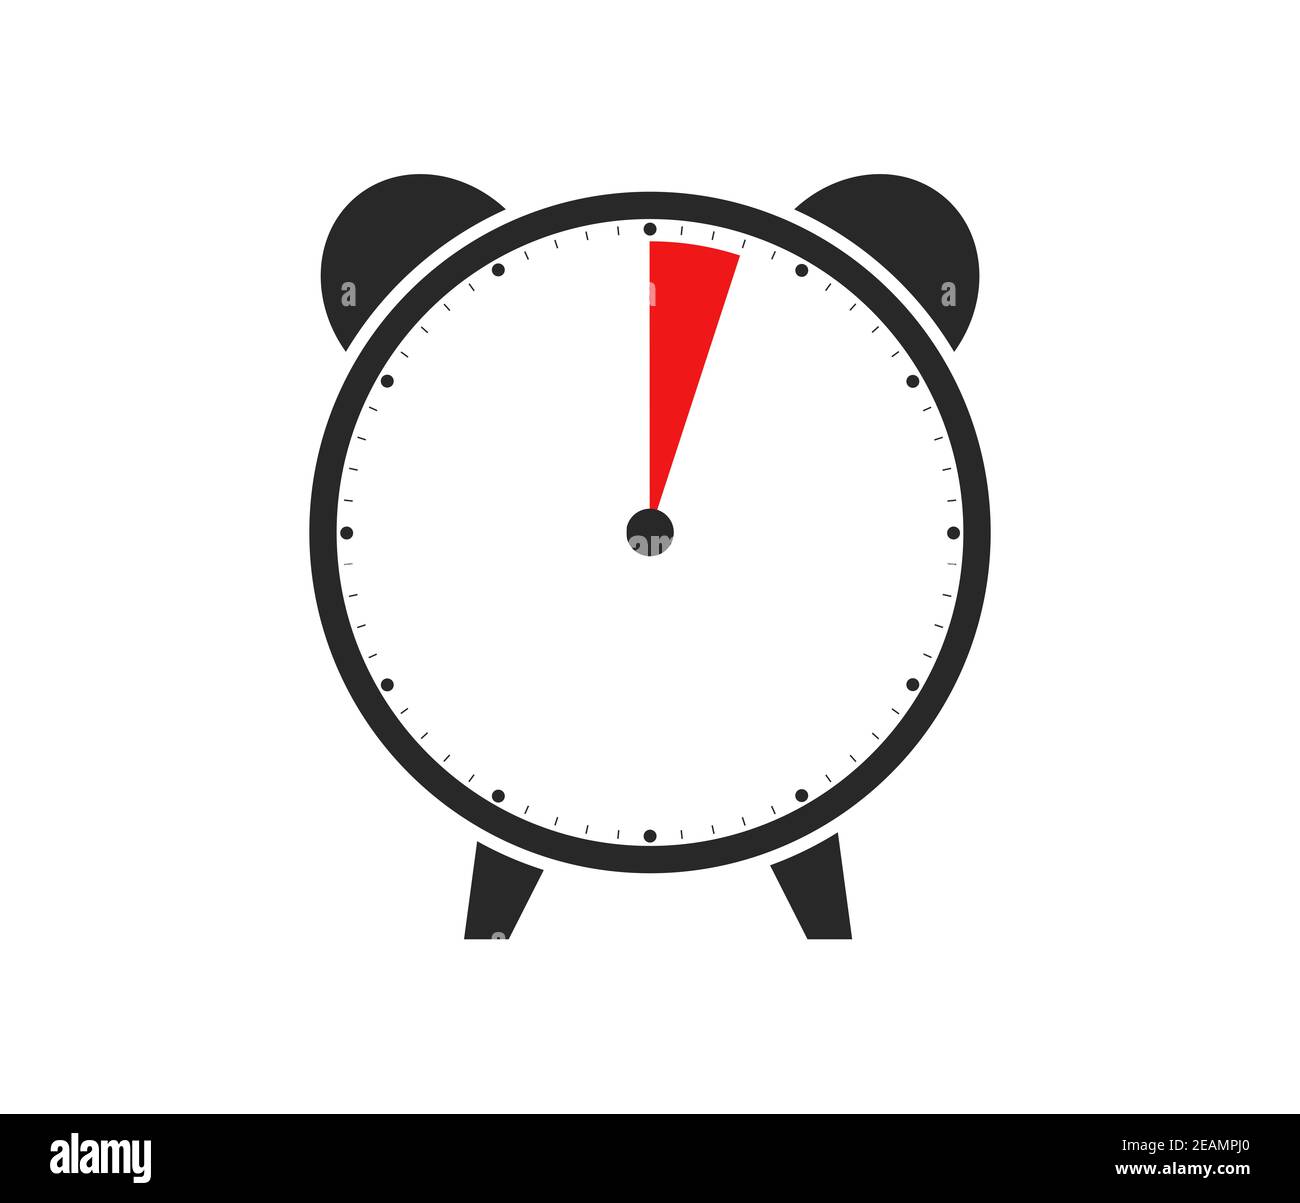 Digital Clock, Digital Timer, 3:00, 3 O'clock, 3 Minutes Stock